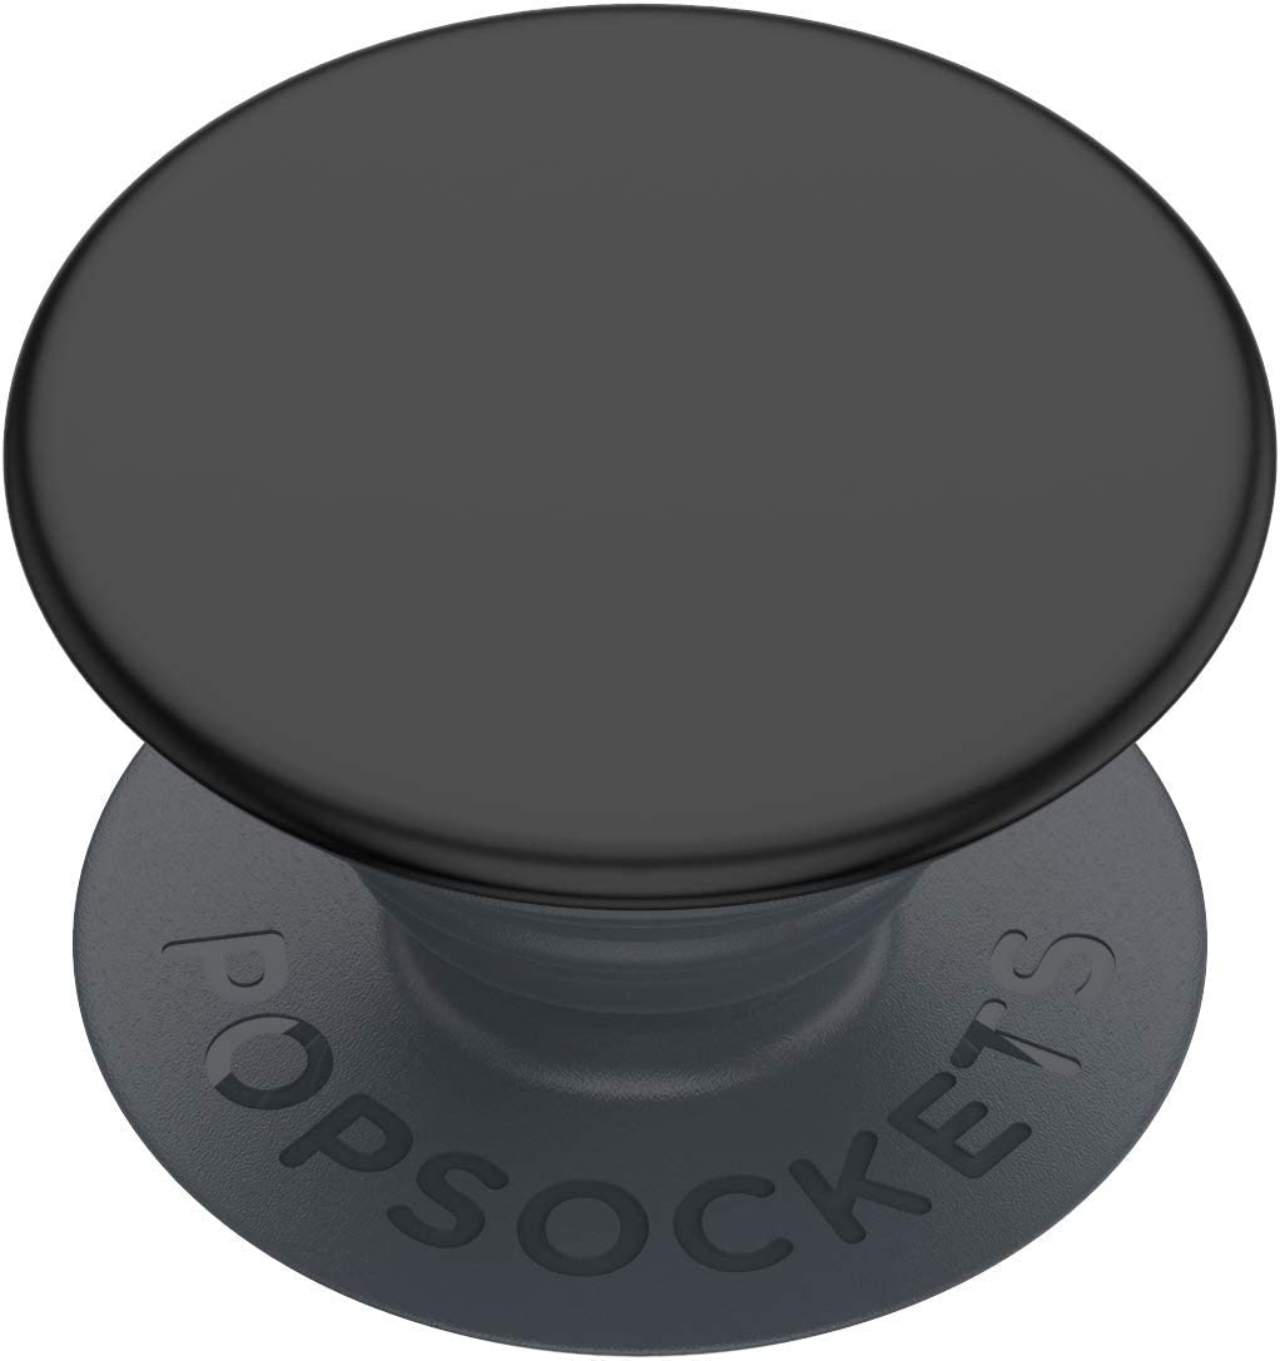 L'impugnatura per smartphone PopSockets PopGrip